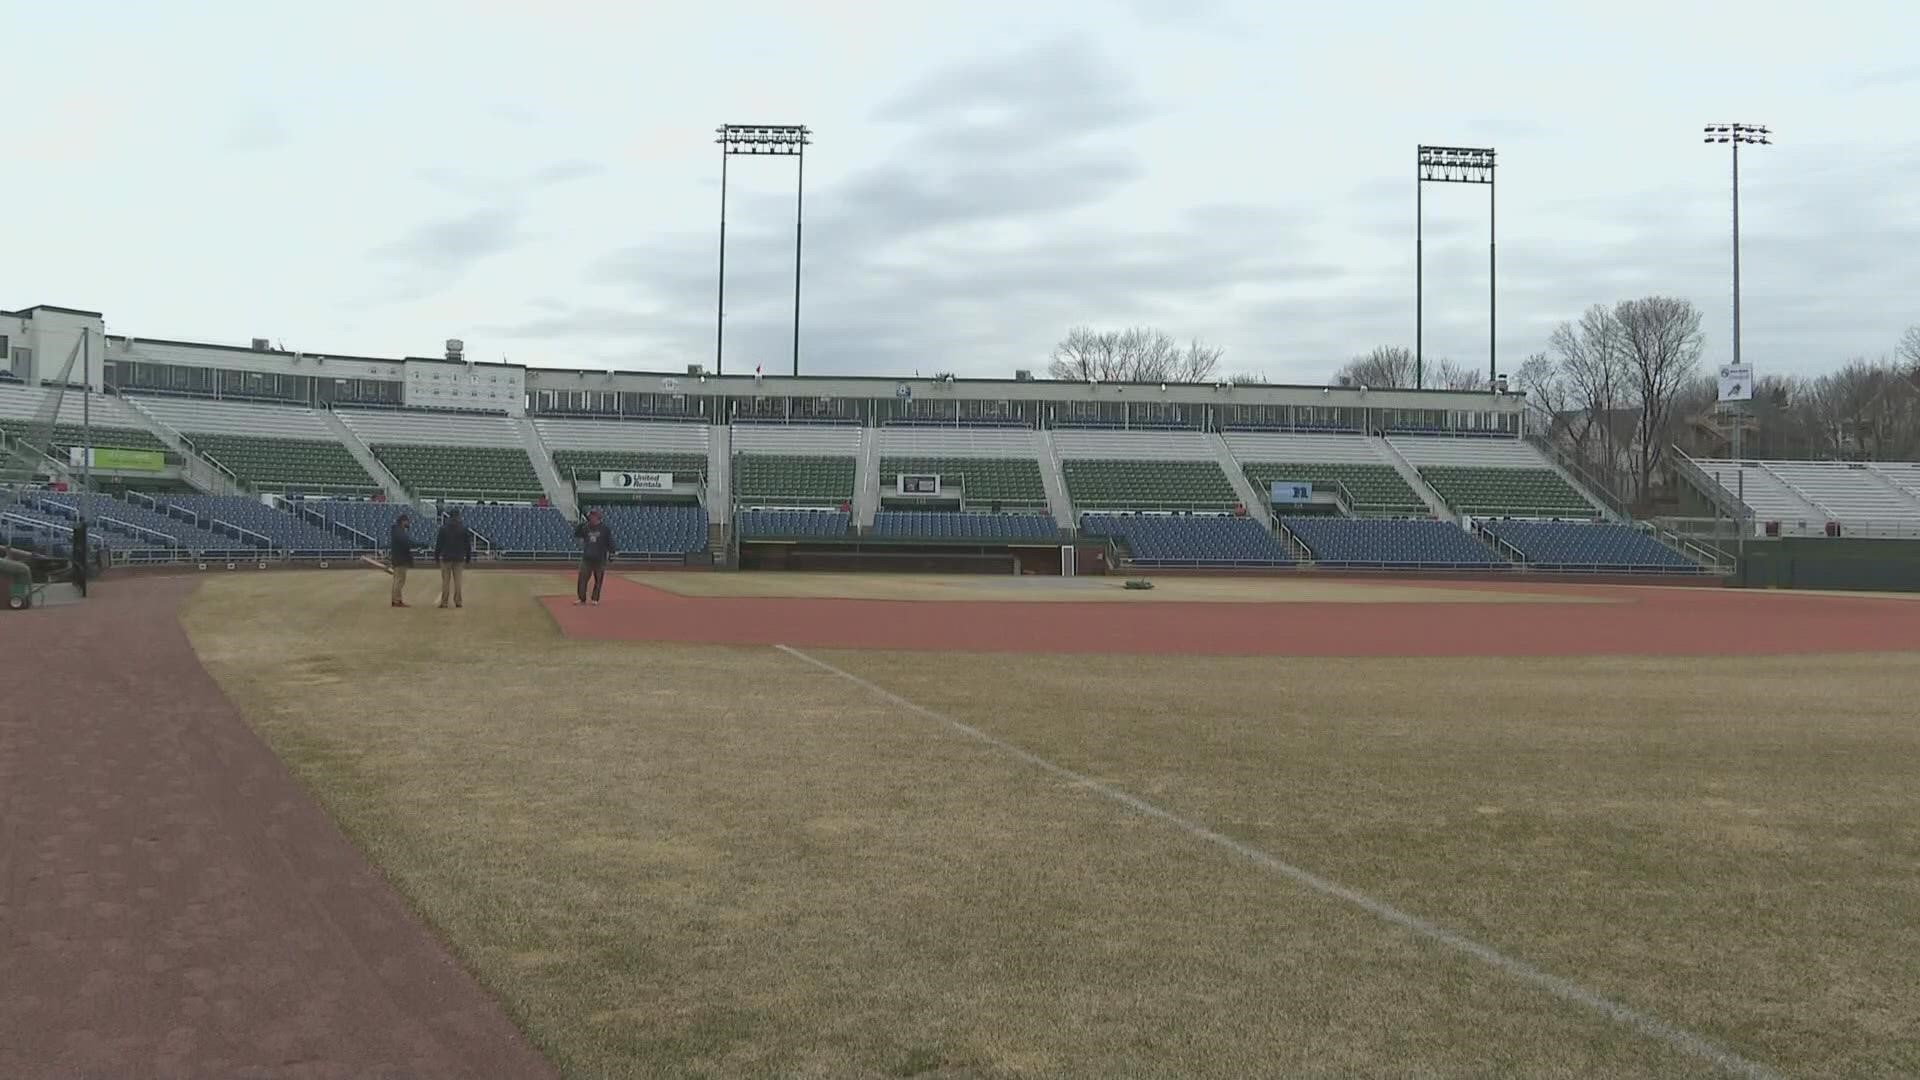 Maine's minor league baseball affiliate is ready for 2022 season